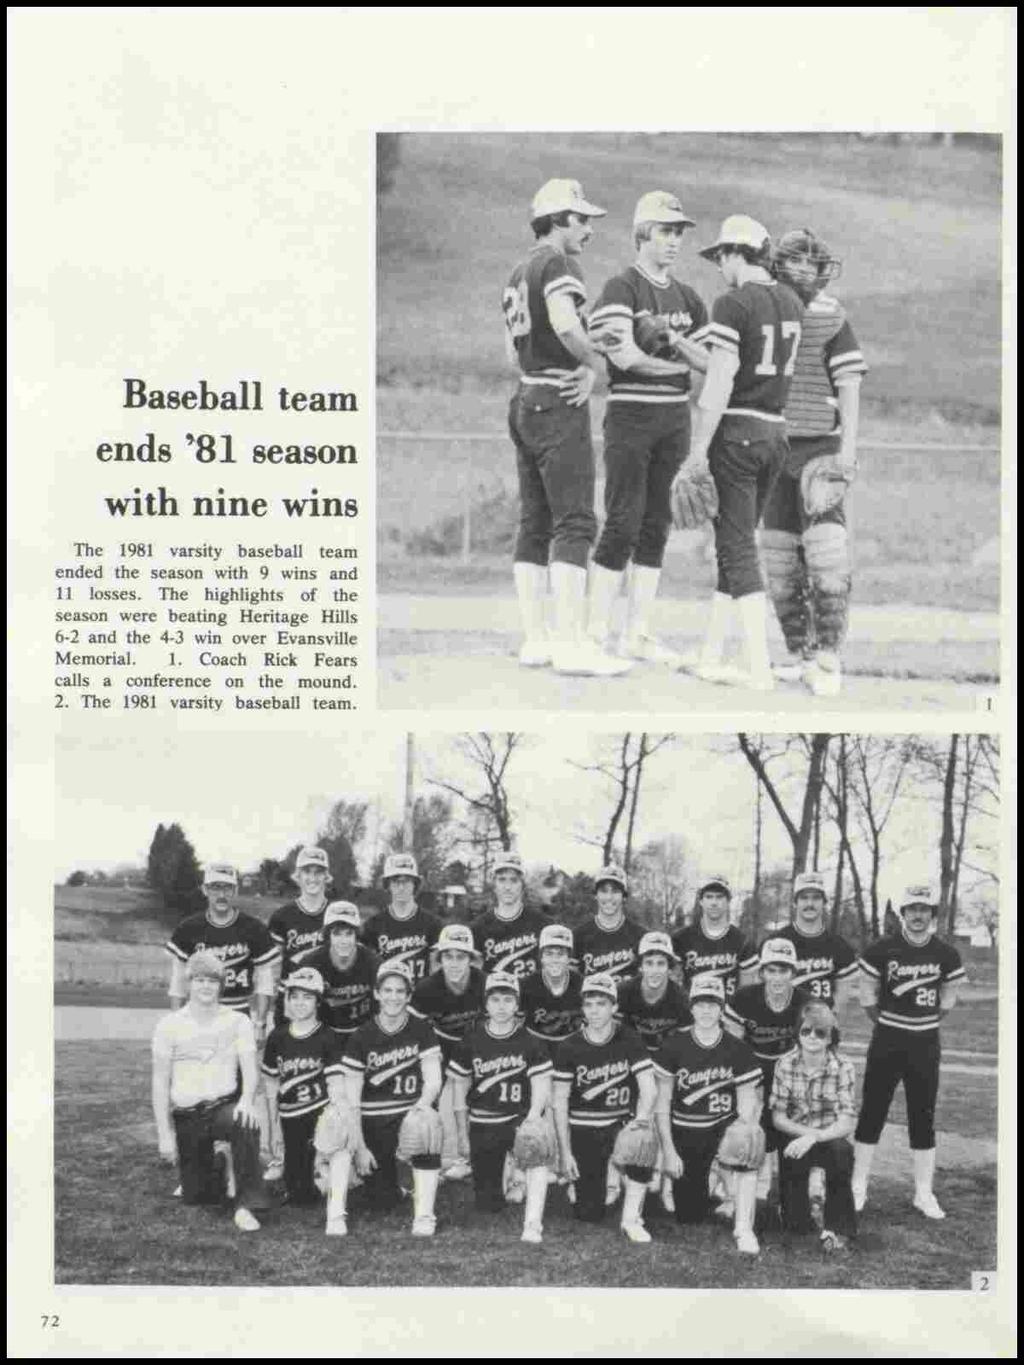 Baseball team ends '81 season with nine wins The 1981 varsity baseball team ended the season with 9 wins and 11 losses.